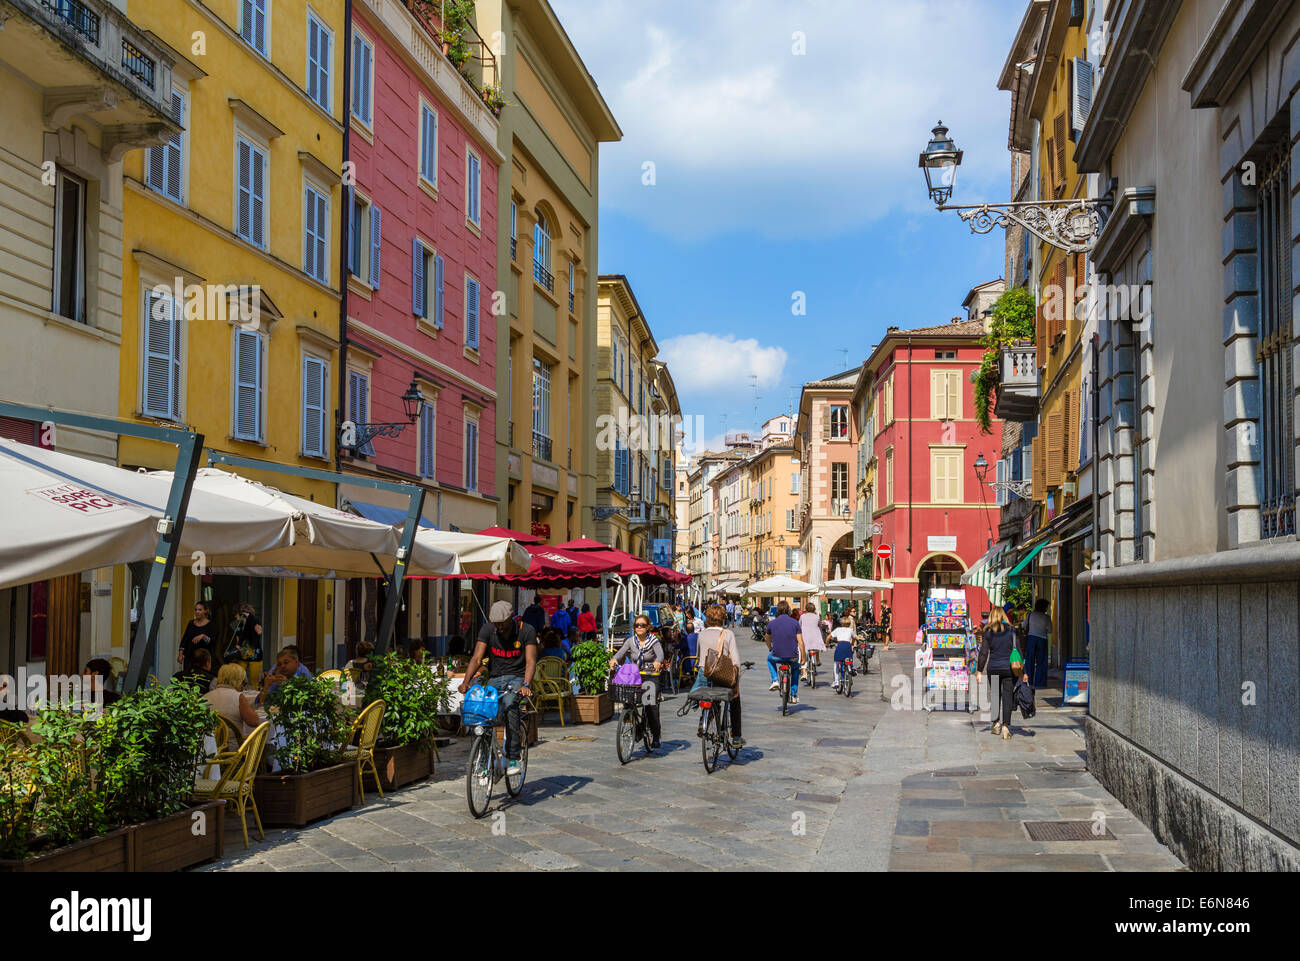 Shops and cafes on Strada Farini in the historic city centre, Parma, Emilia Romagna, Italy Stock Photo